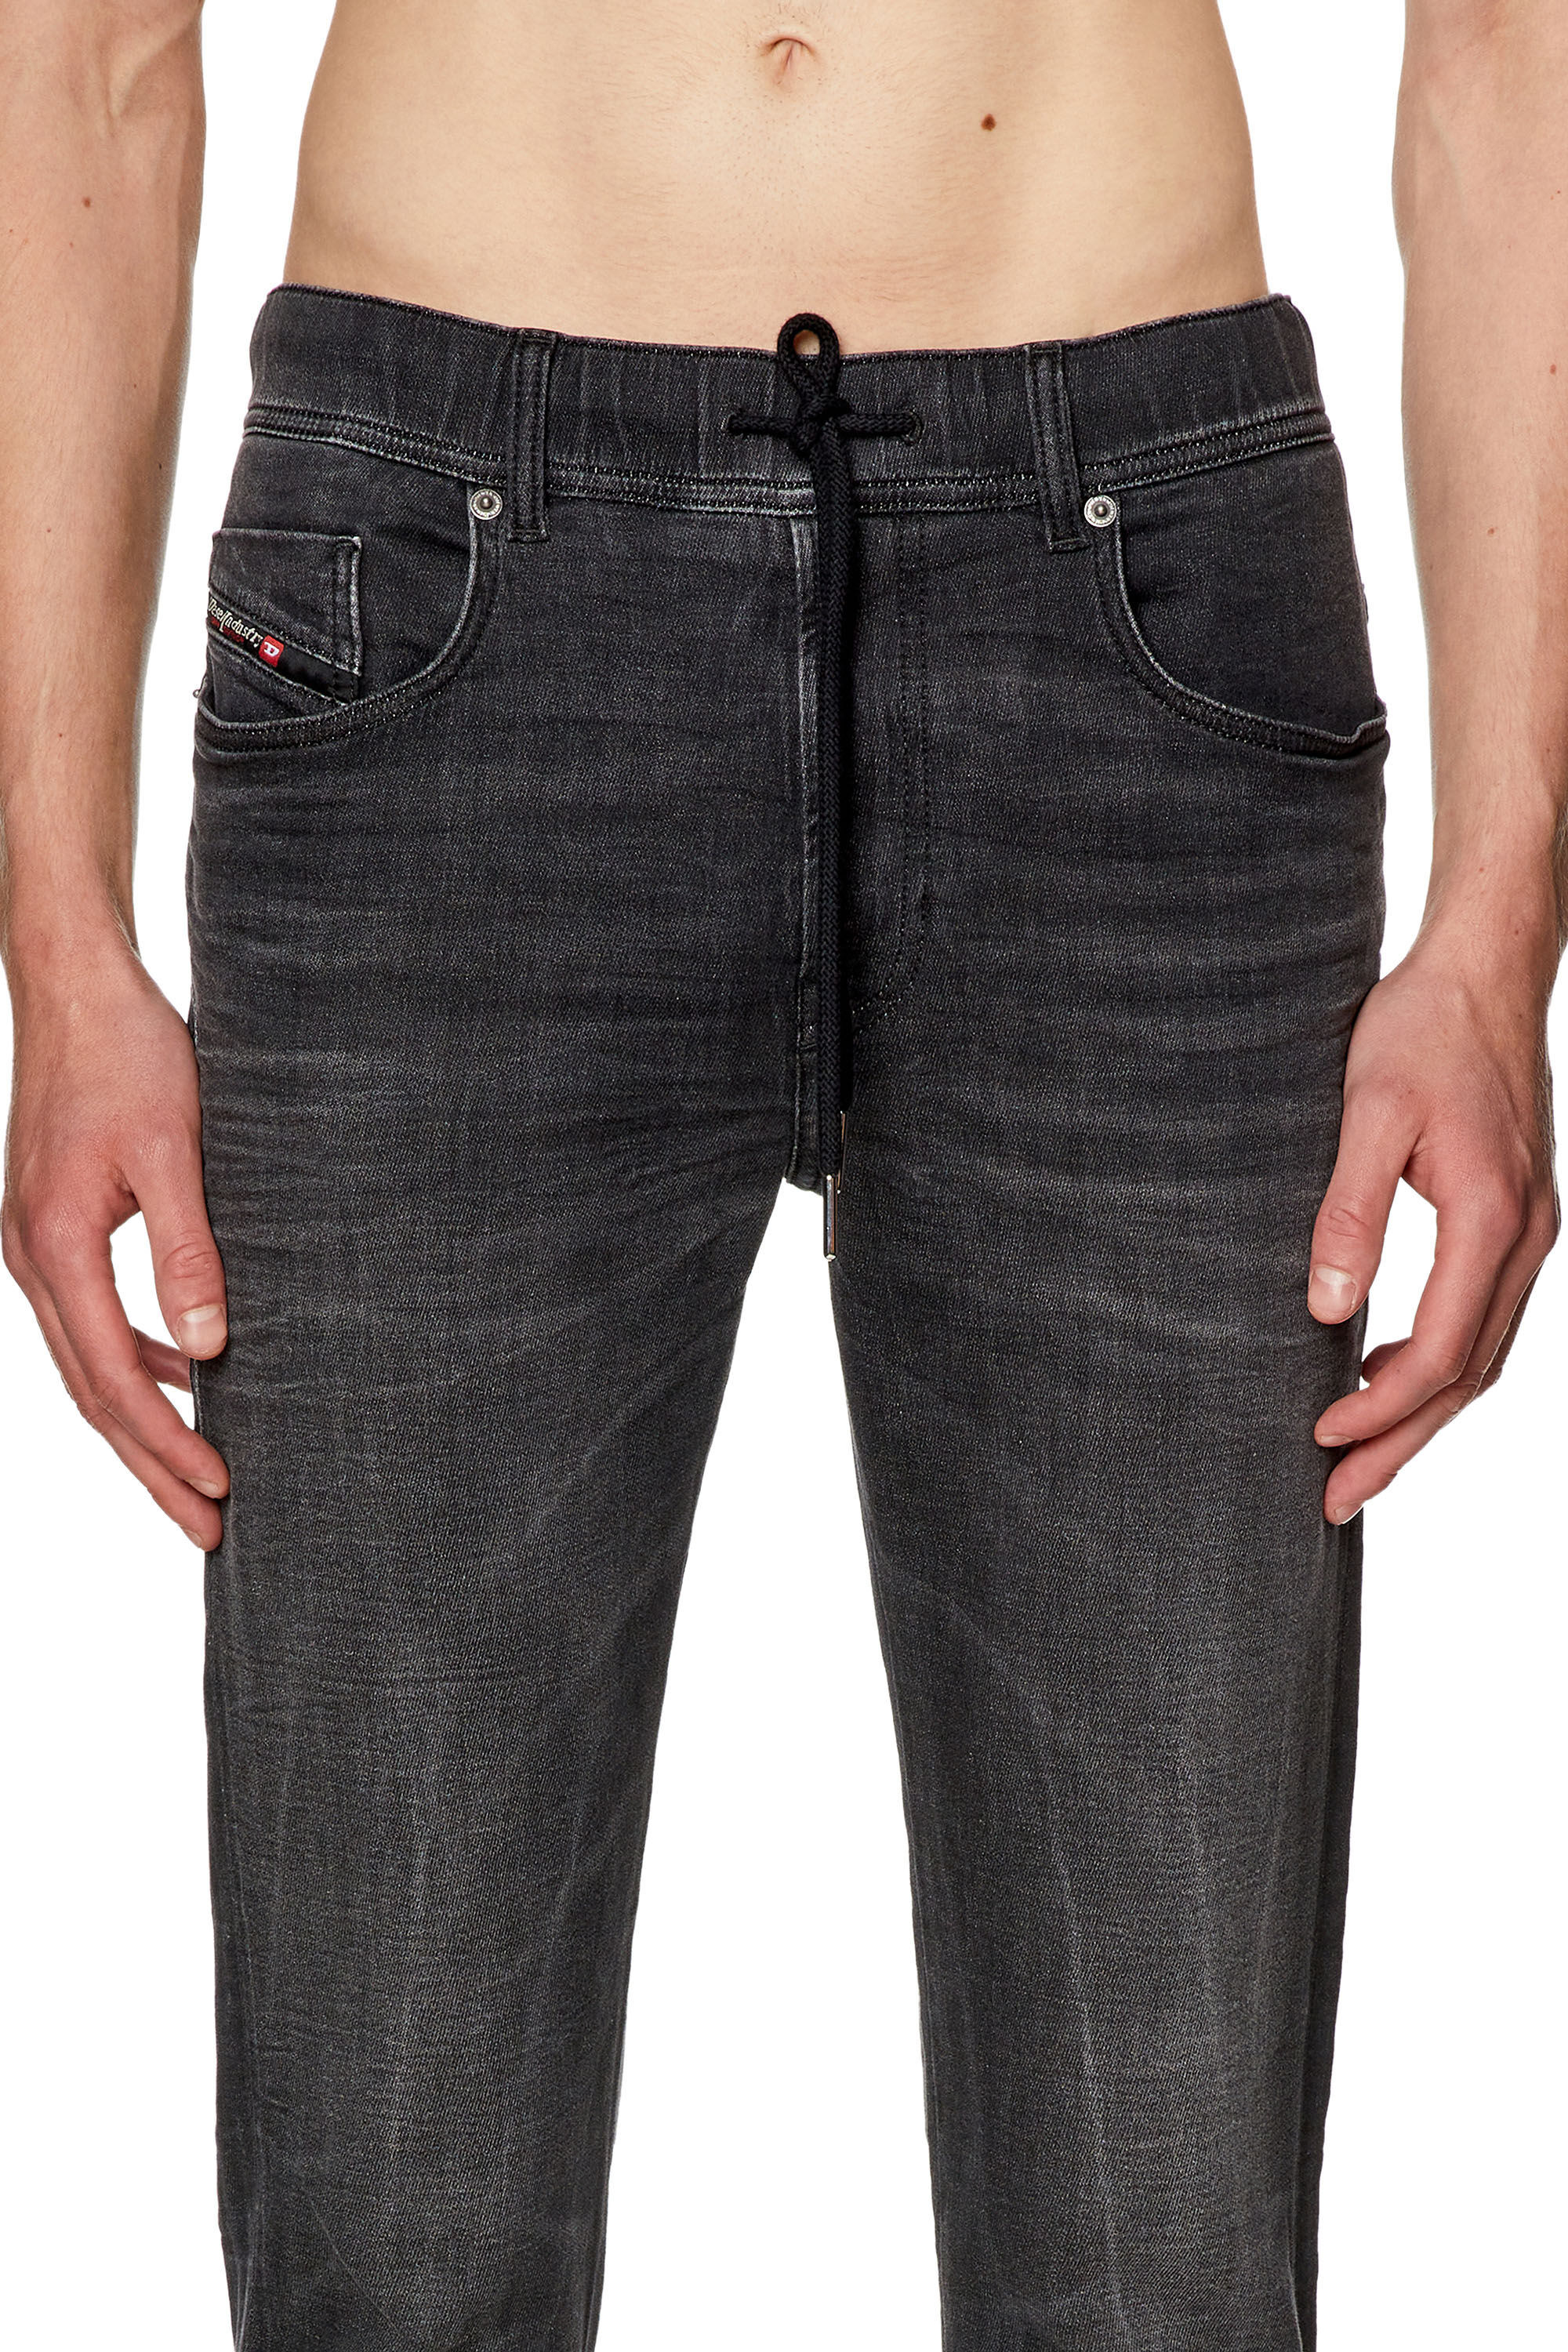 Men's Slim Jeans | Black/Dark grey | Diesel E-Spender JoggJeans®